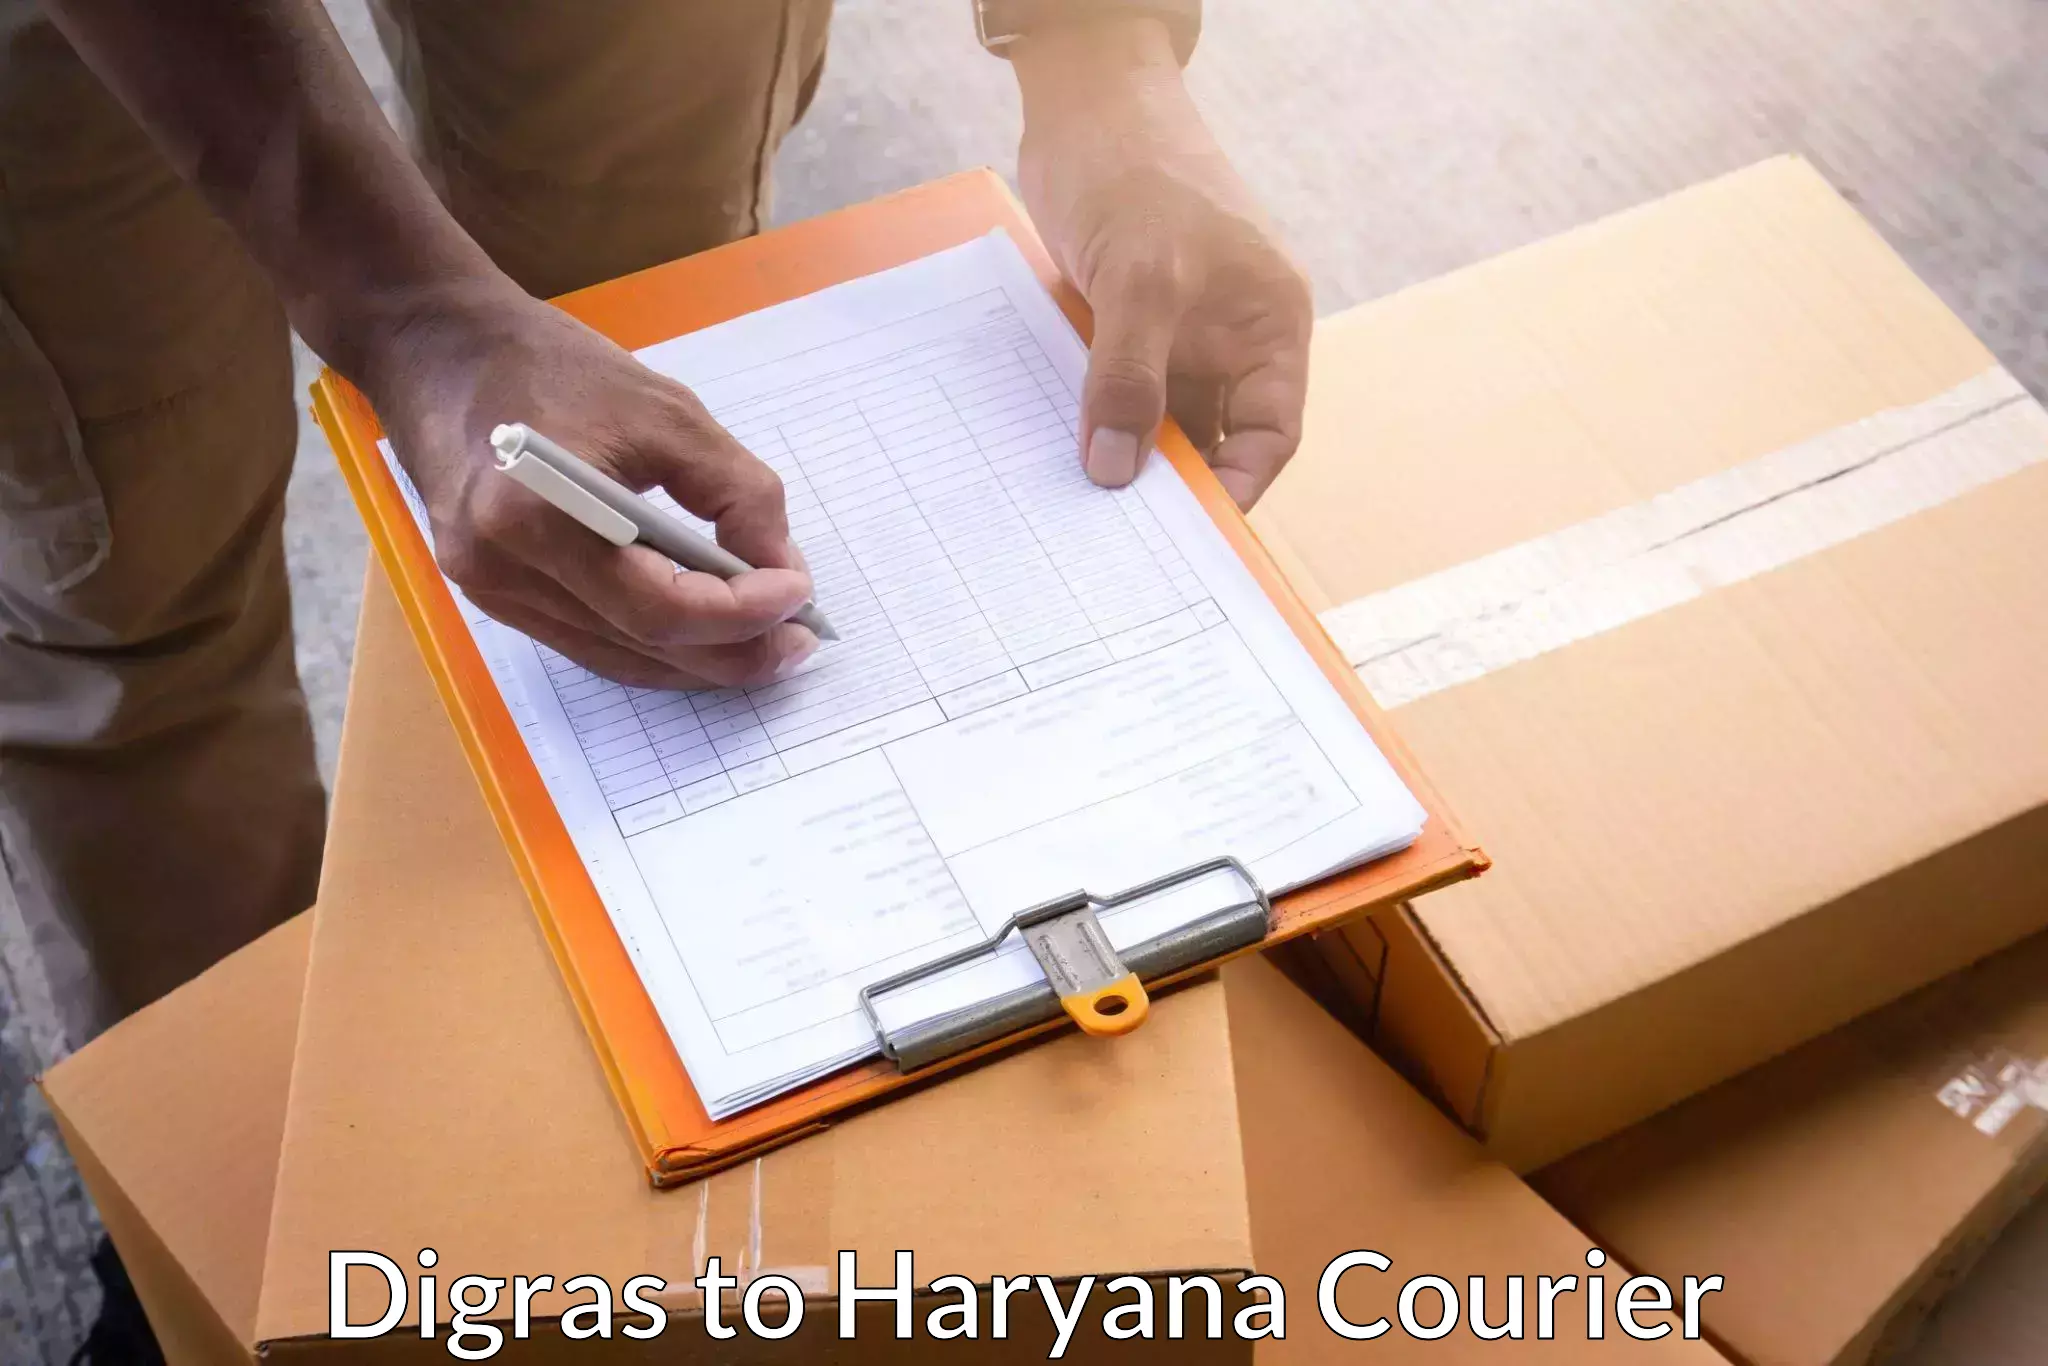 Urgent courier needs Digras to Chirya